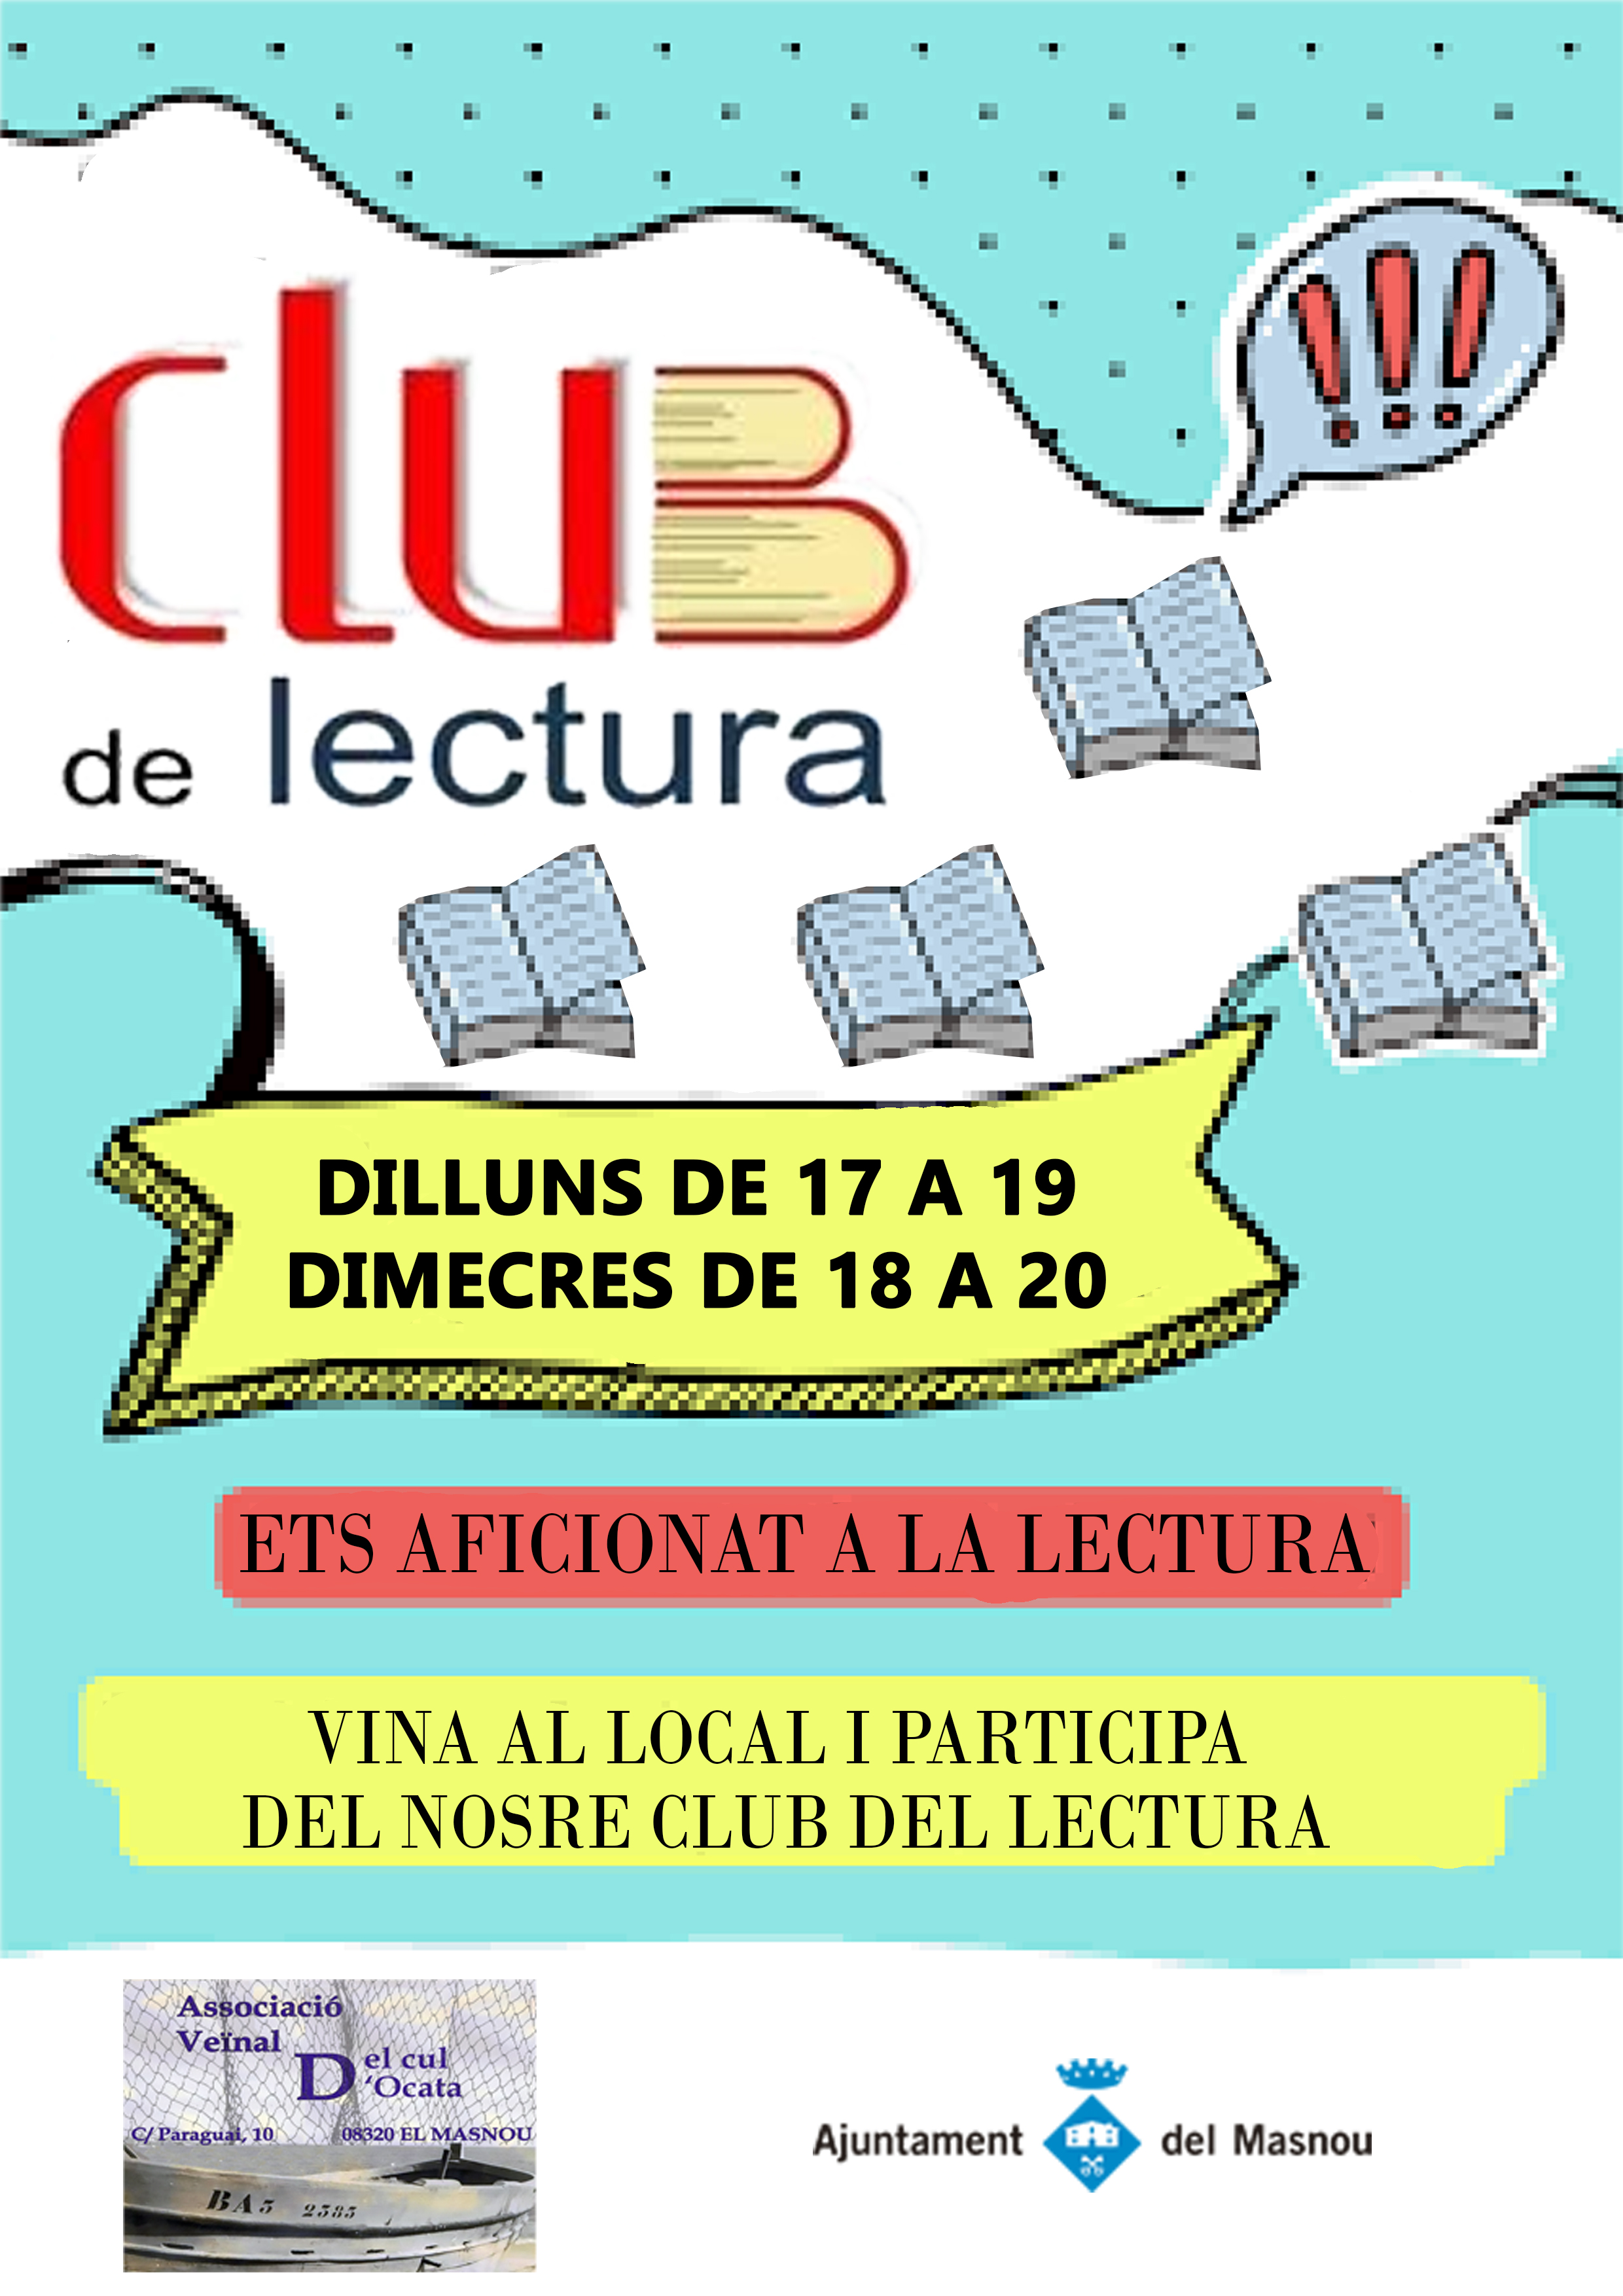 'CLUB DE LECTURA'